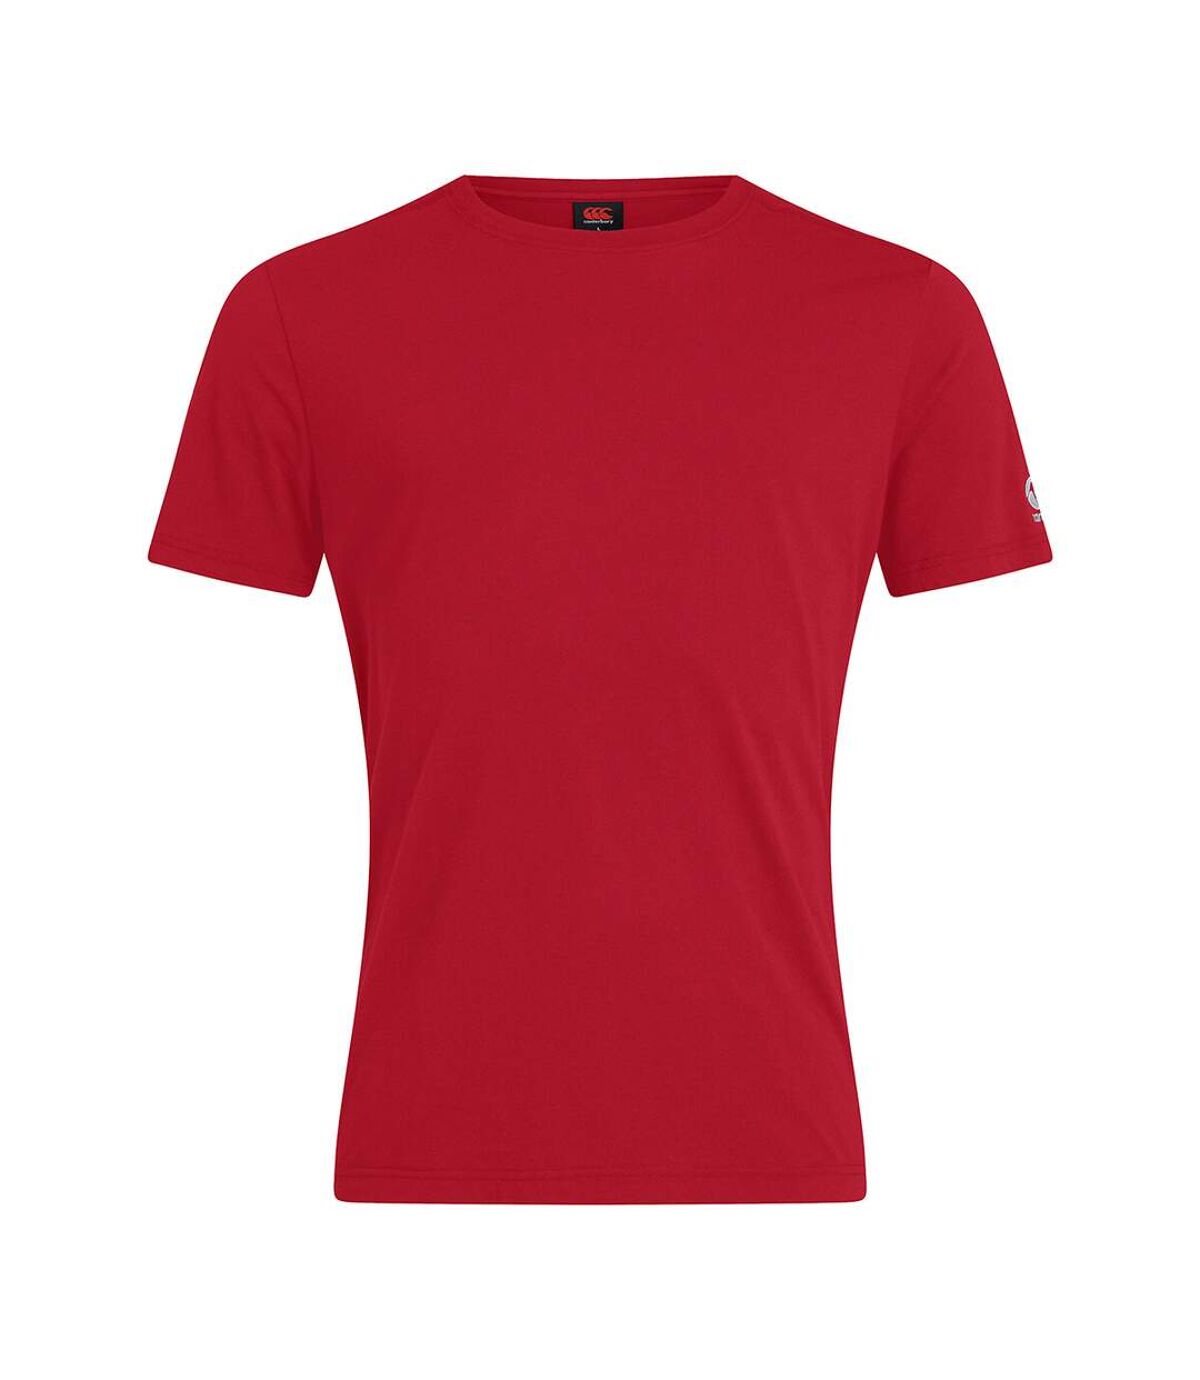 Canterbury - T-shirt CLUB - Adulte (Rouge) - UTPC4372